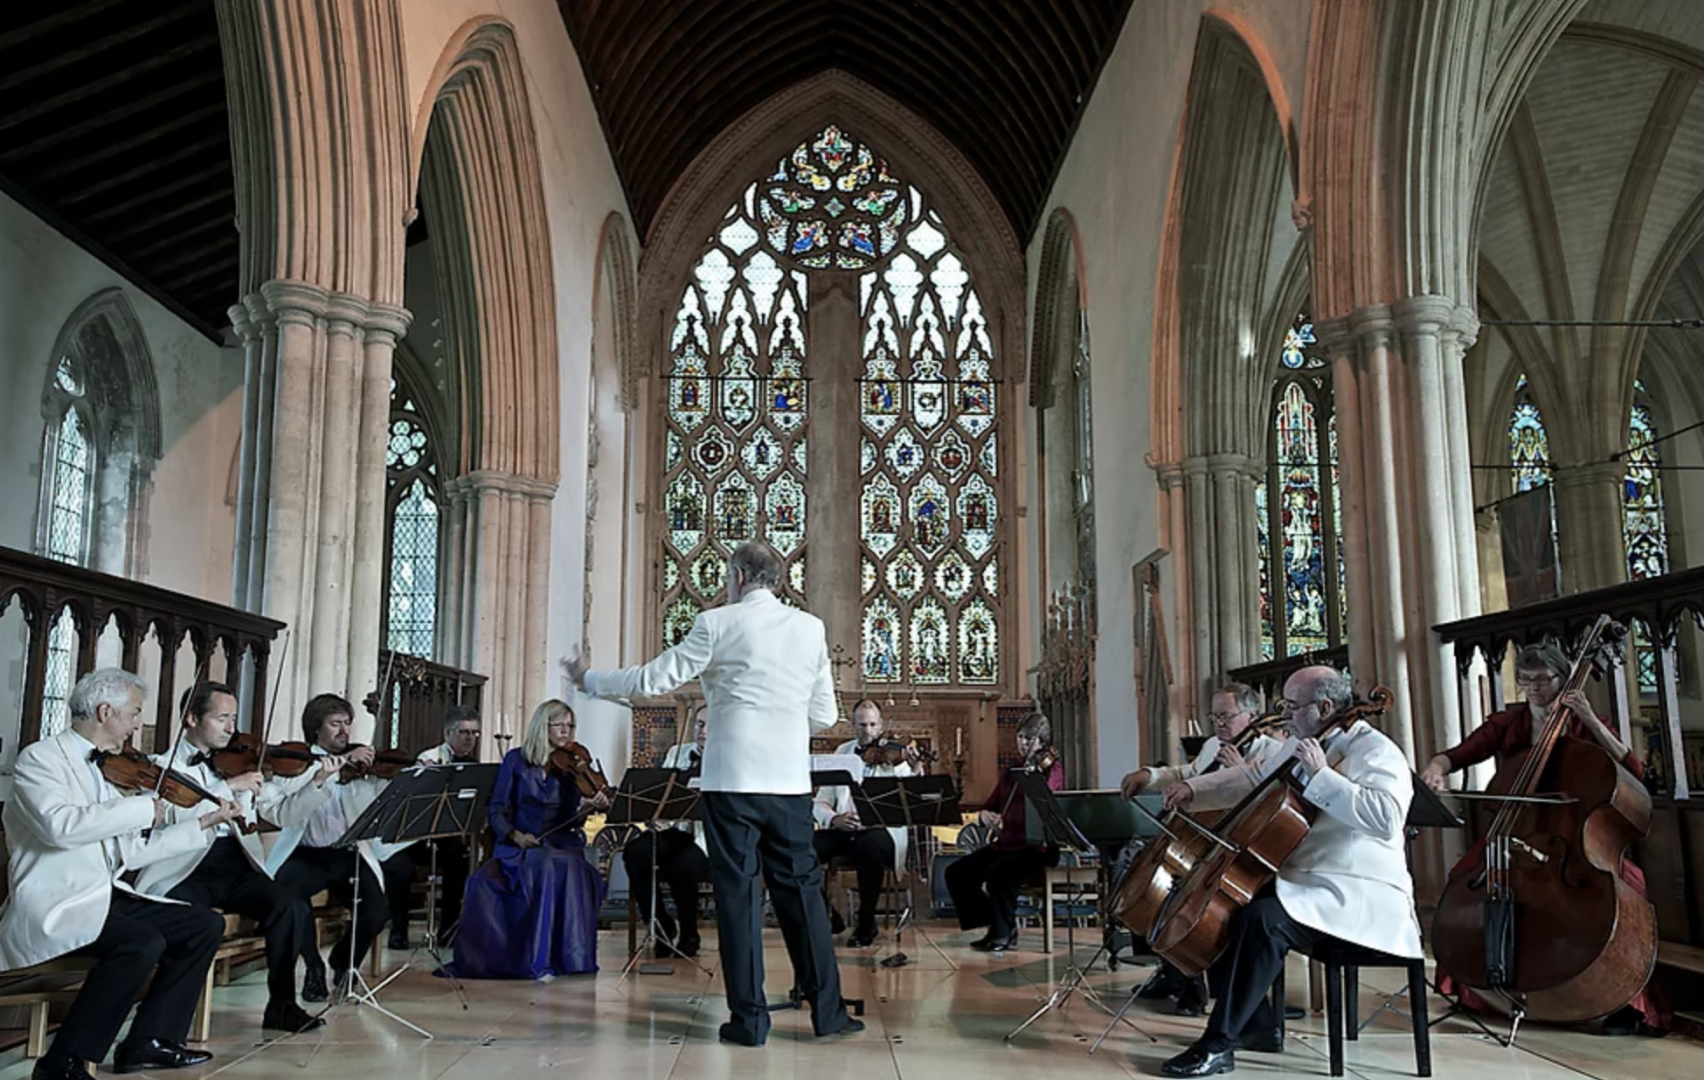 Classical music concert inside a church